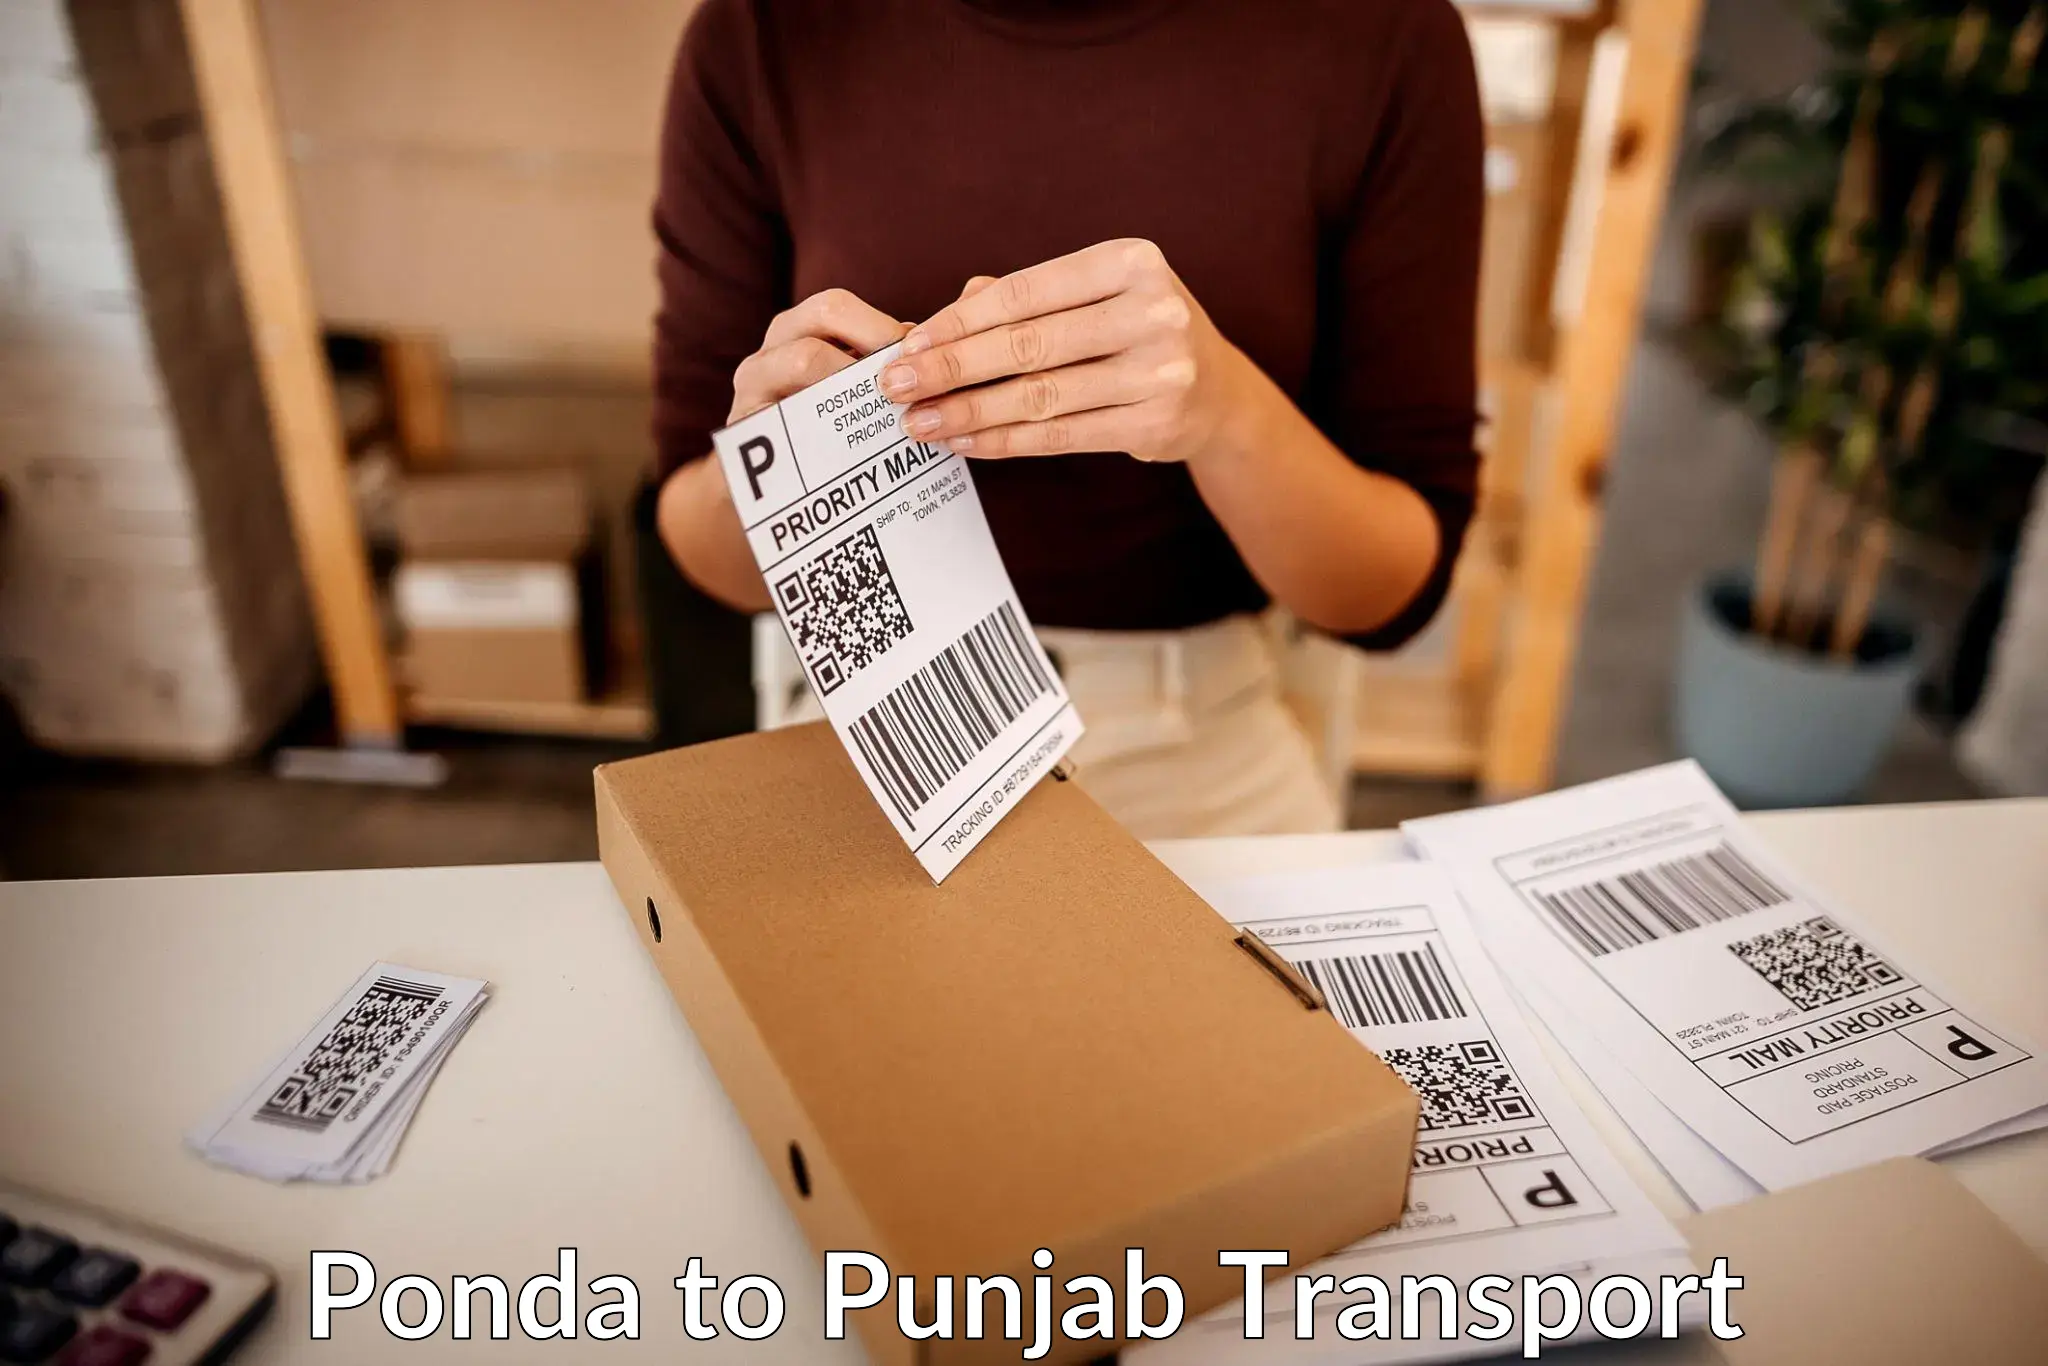 Delivery service Ponda to Mansa